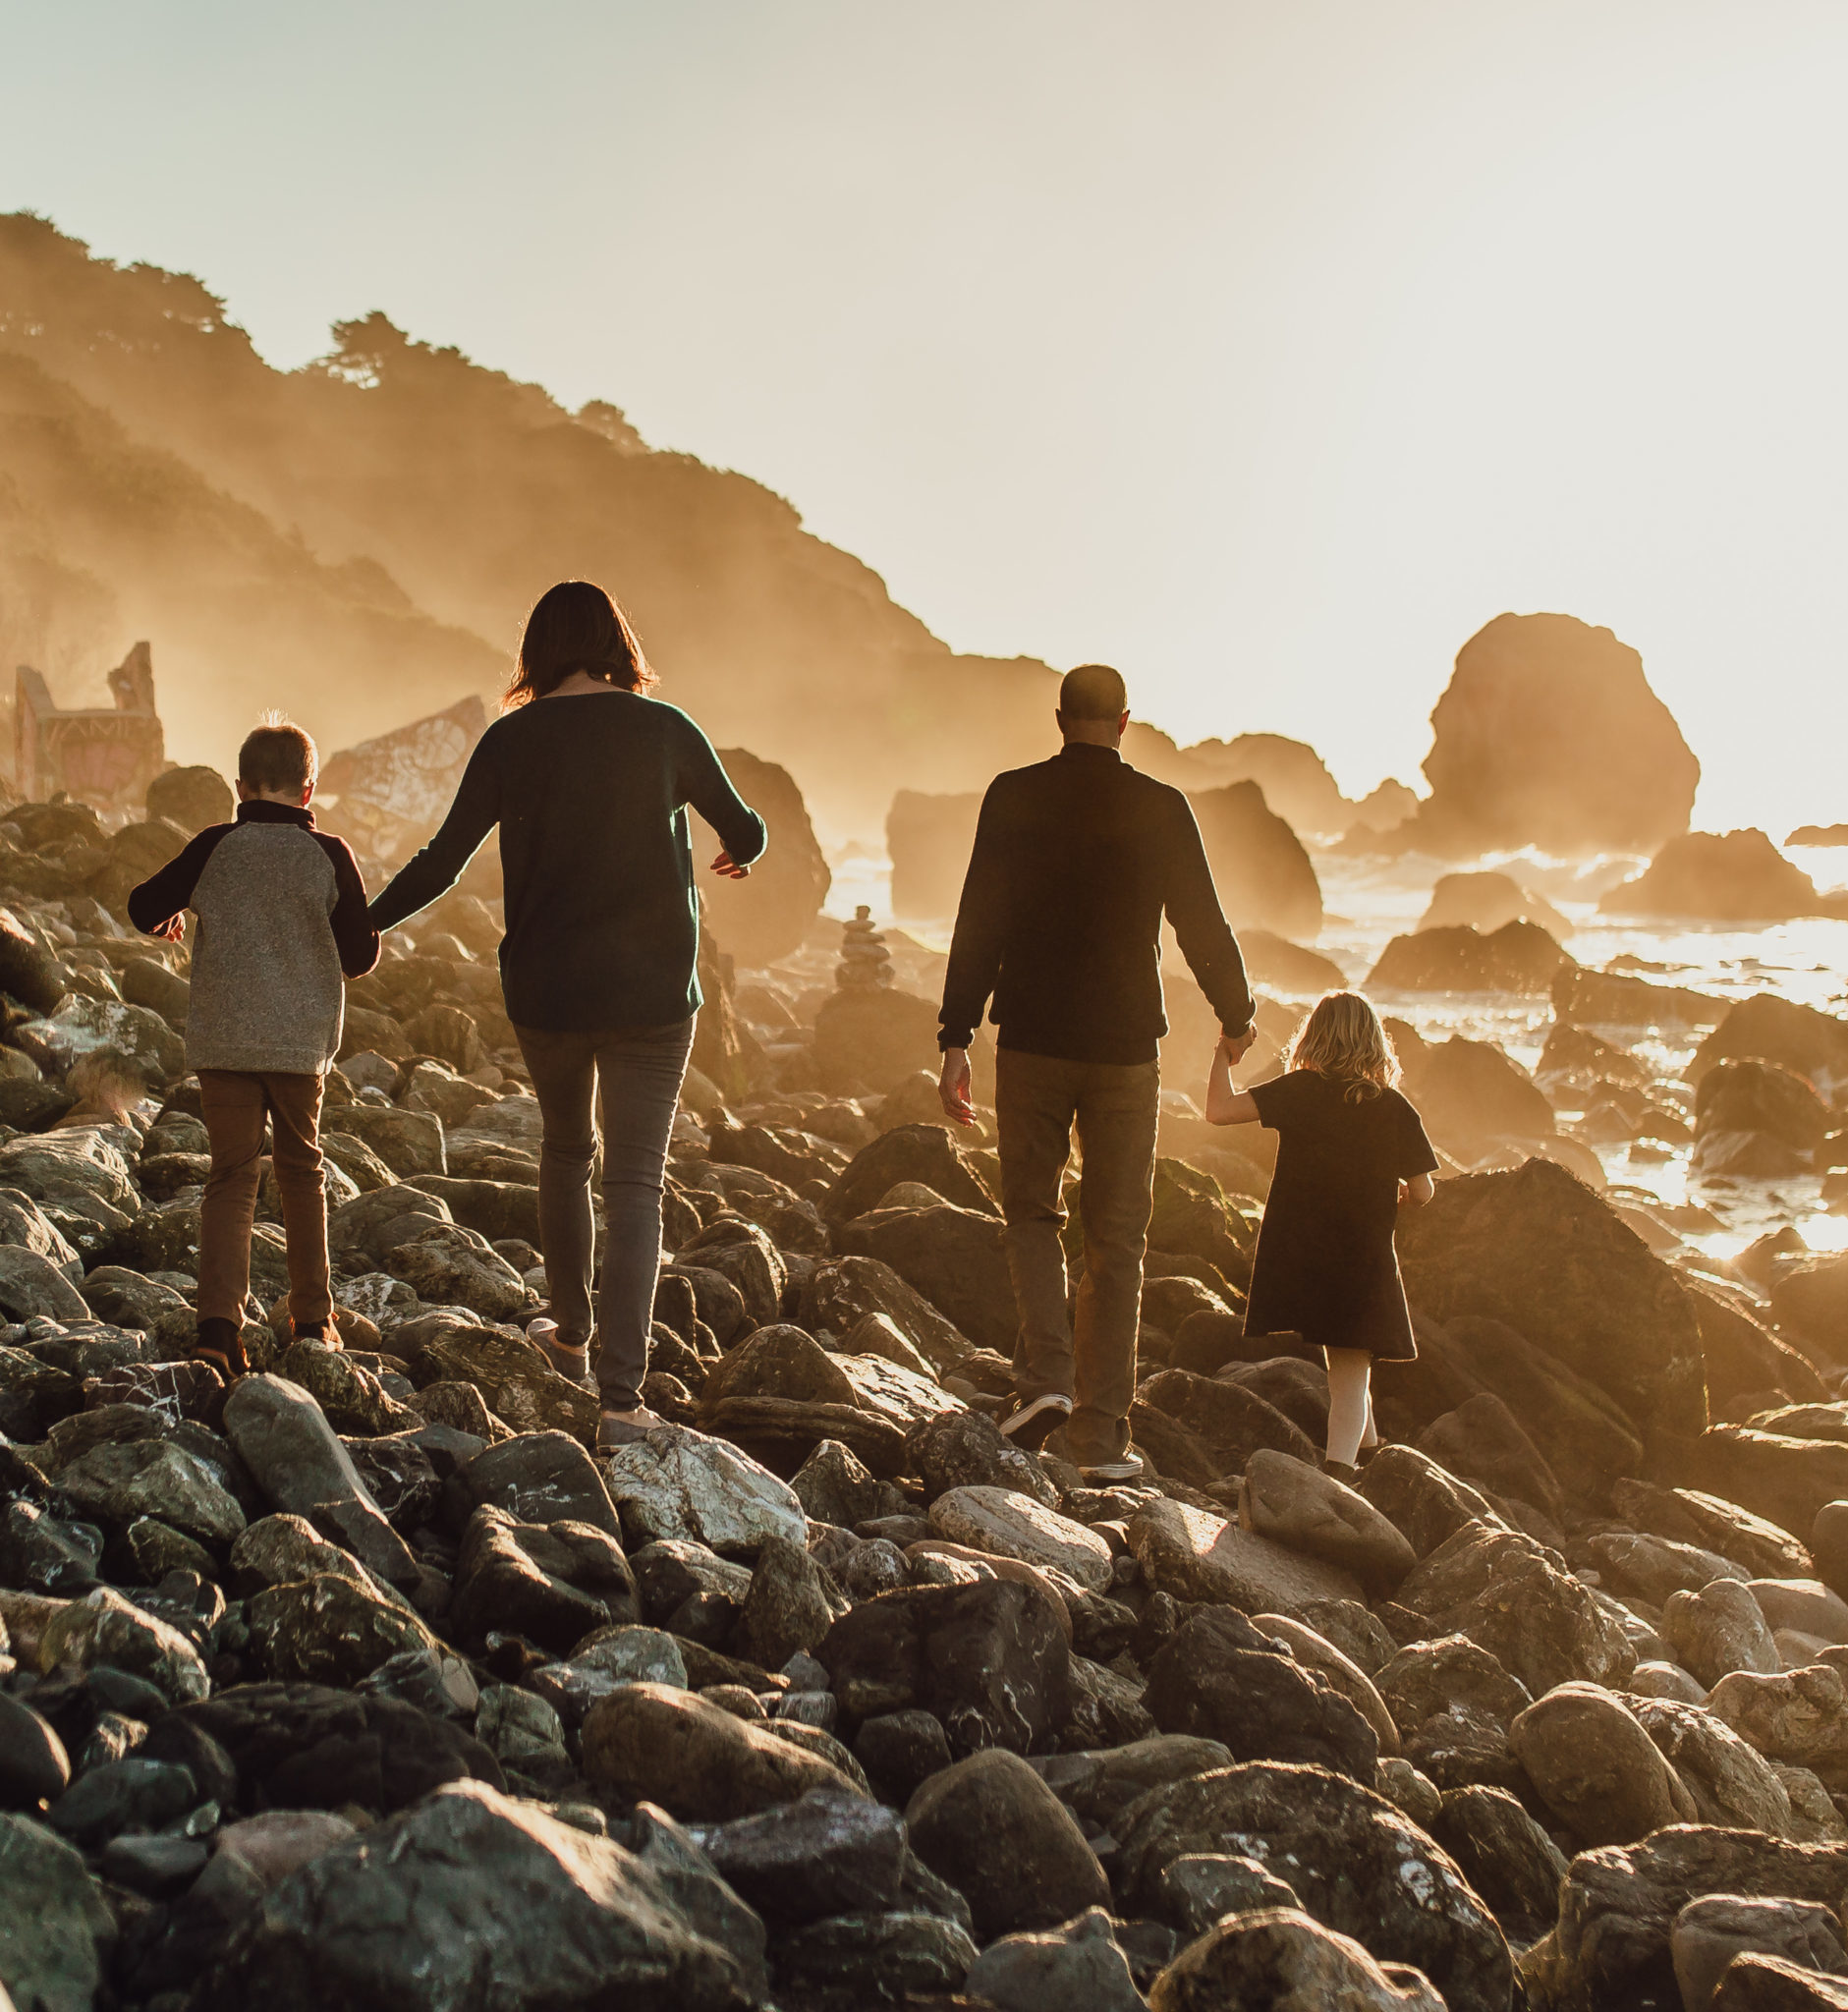 San Francisco family walks down mile rock beach at sunset